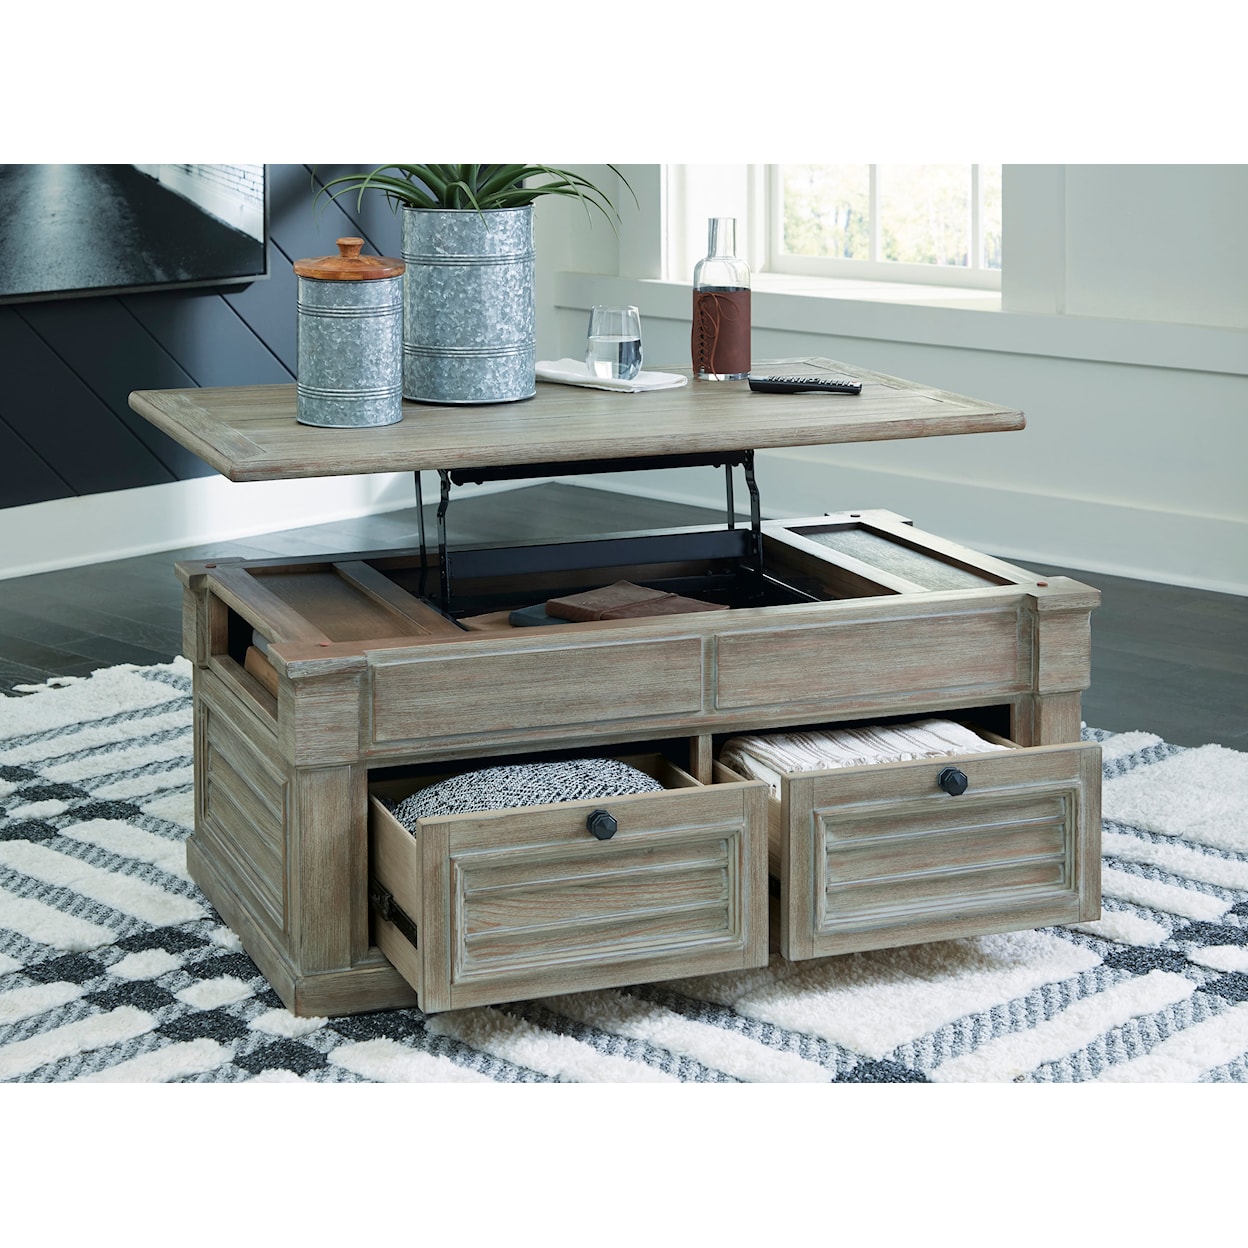 Ashley Furniture Signature Design Moreshire Lift Top Coffee Table